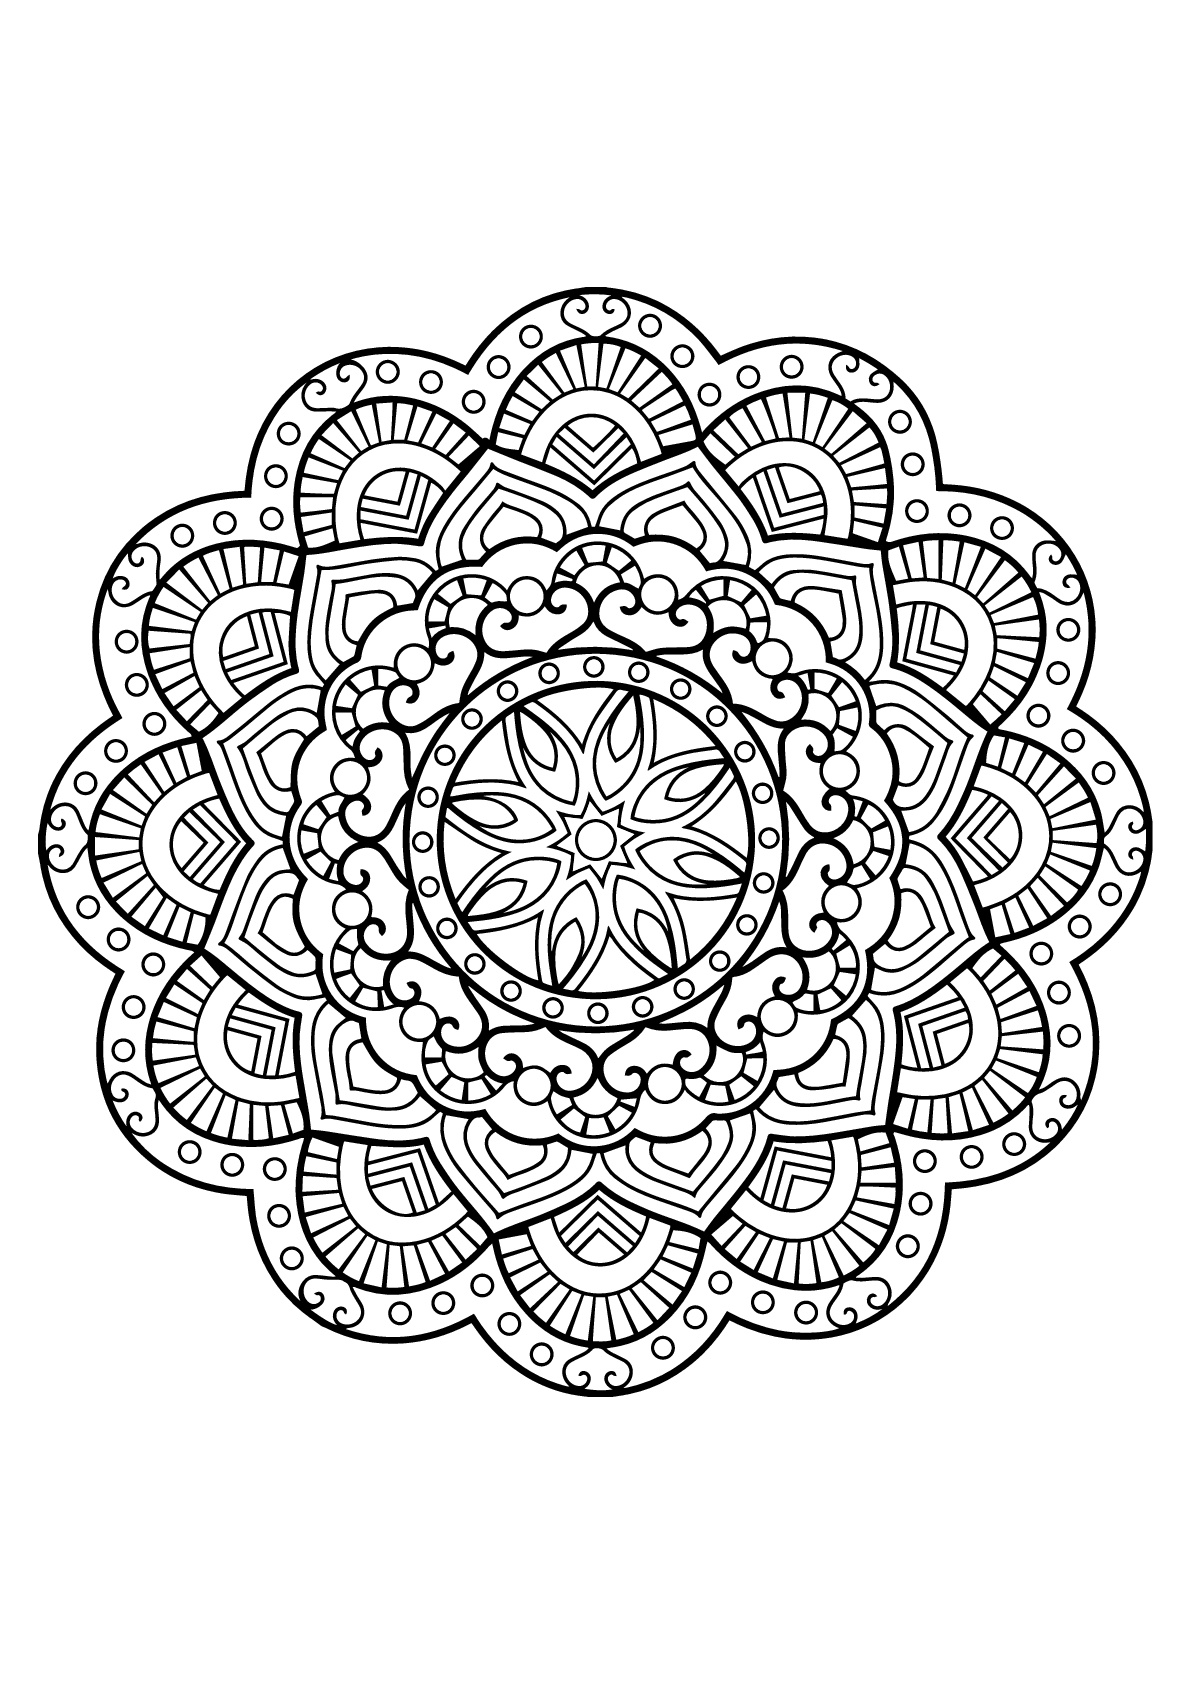 Free Celtic Mandala Coloring Pages at GetColorings.com | Free printable